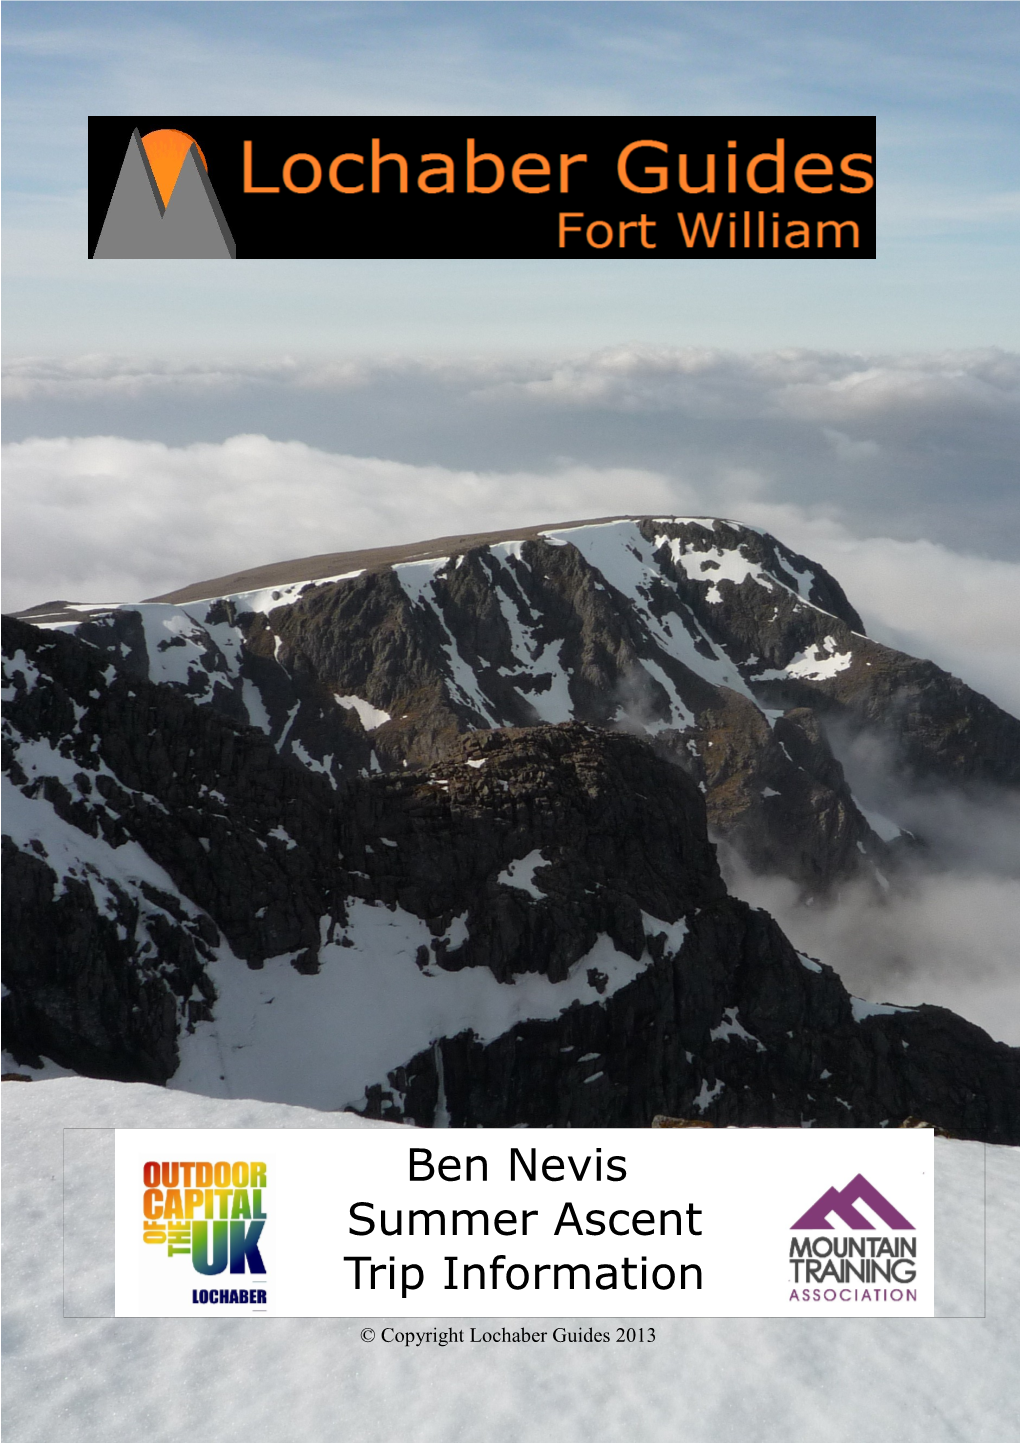 Ben Nevis Summer Ascent Trip Information